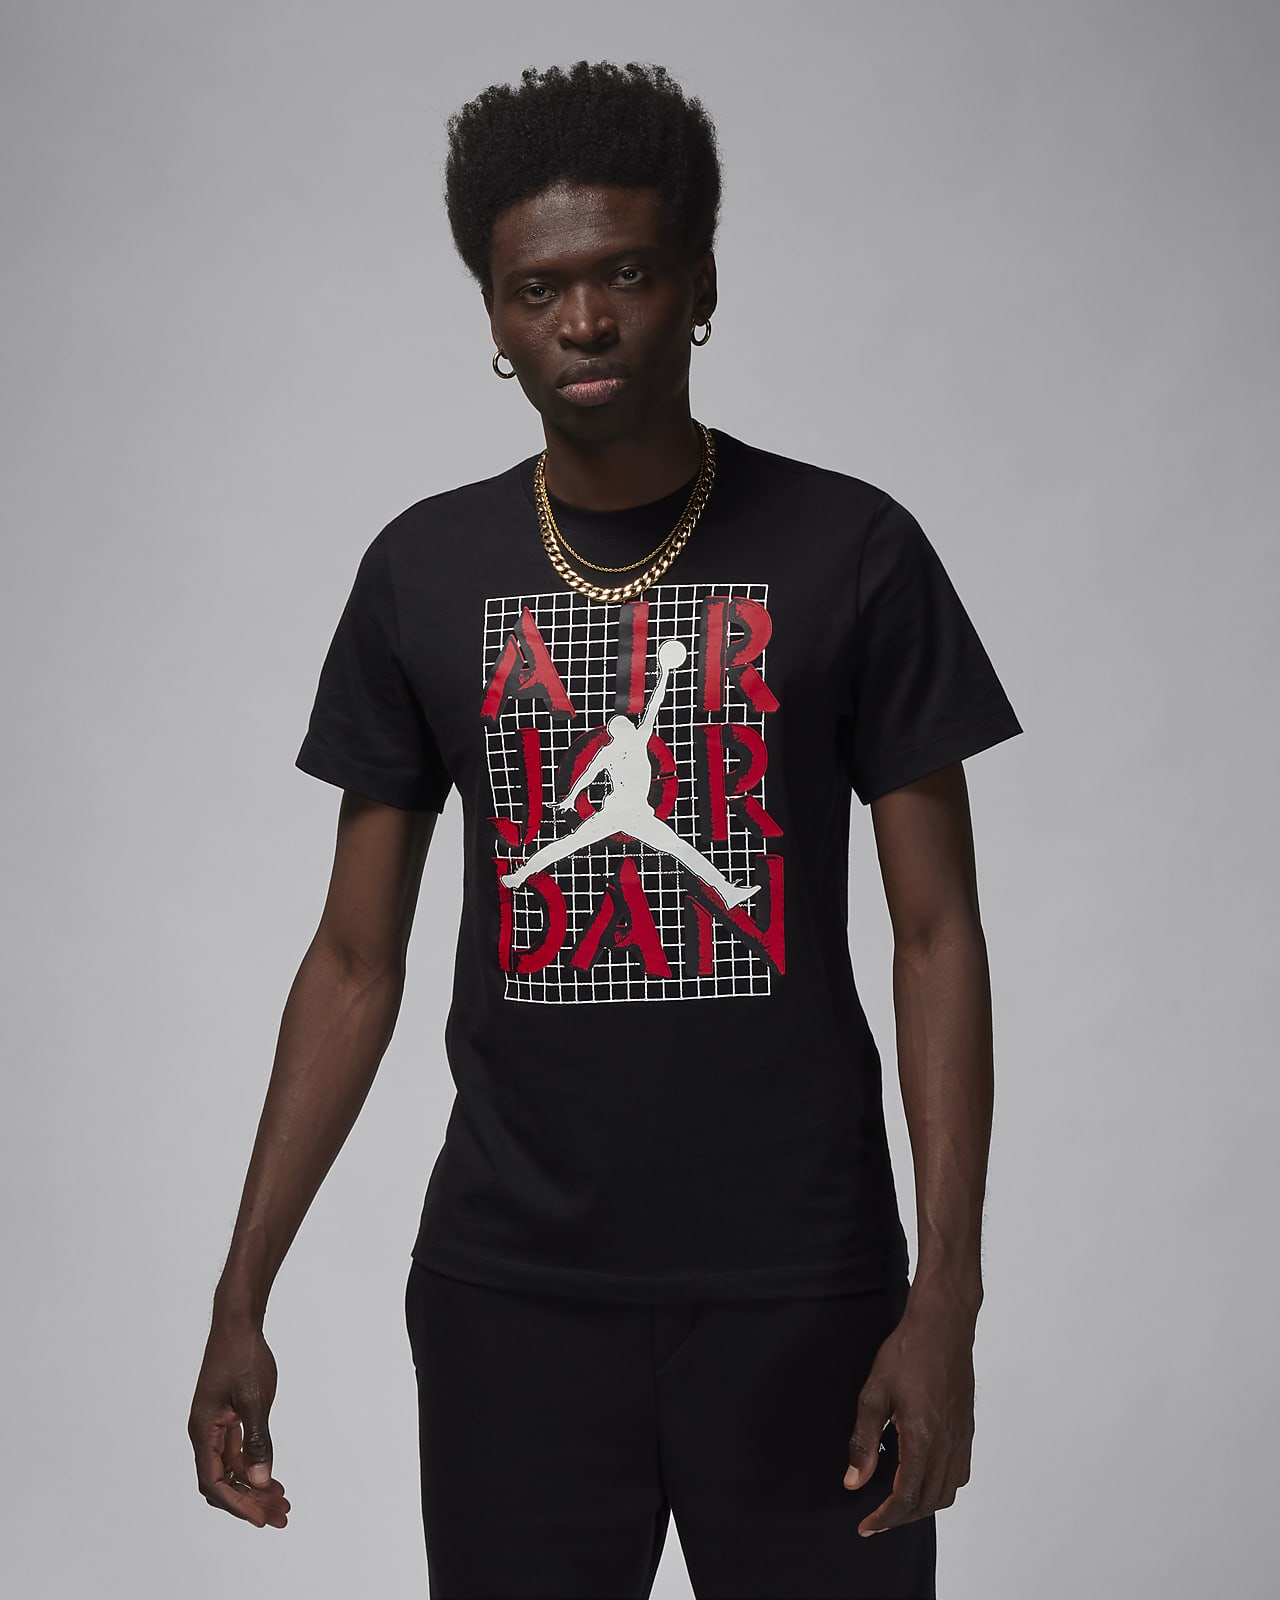 Jordan Brand Camiseta - Hombre